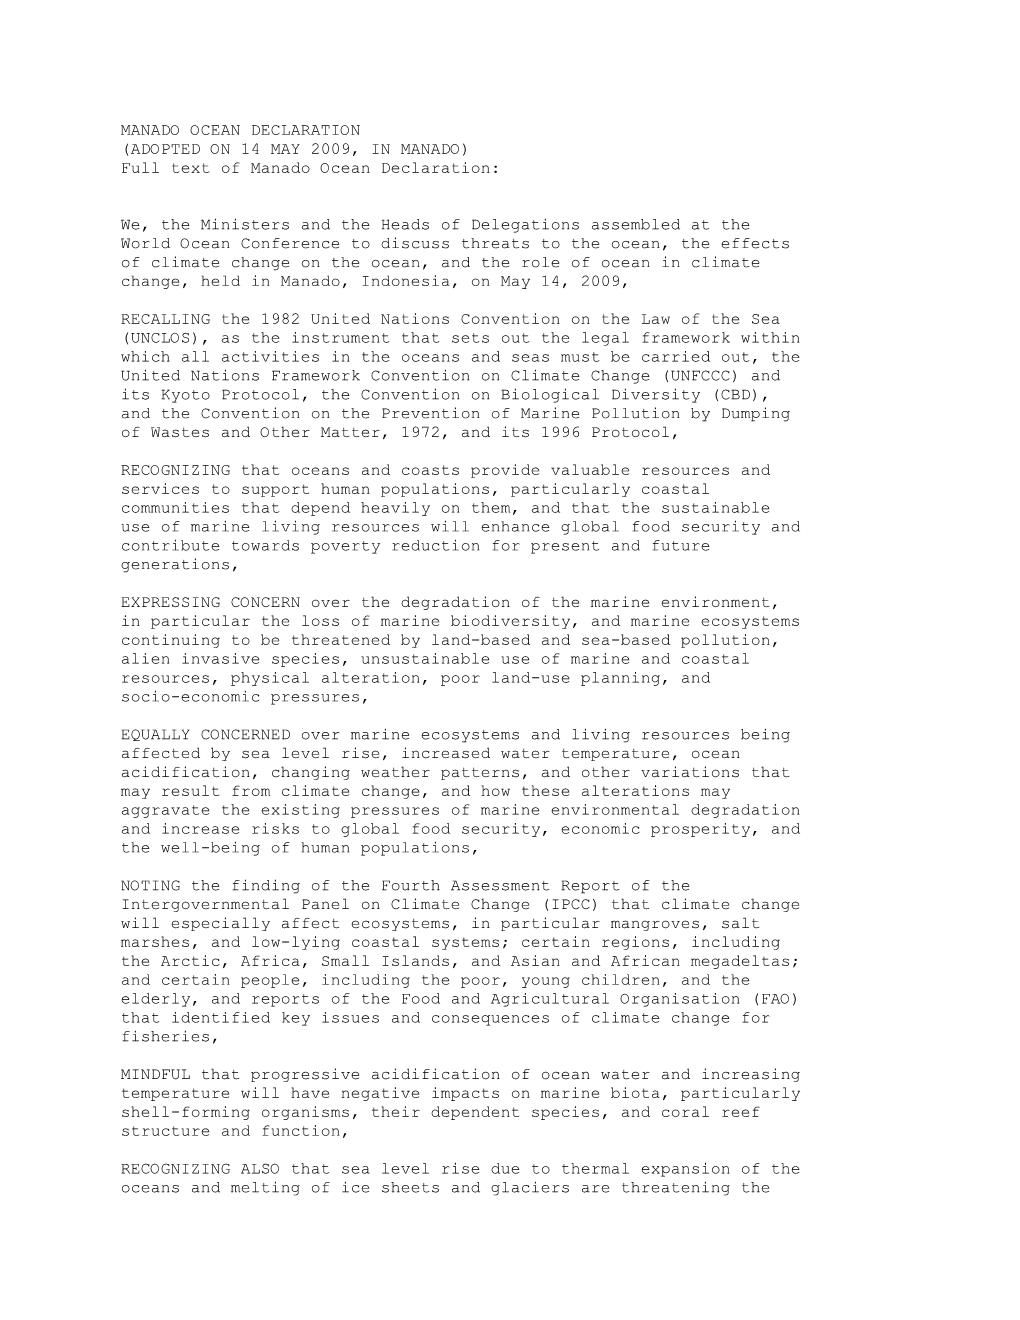 MANADO OCEAN DECLARATION (ADOPTED on 14 MAY 2009, in MANADO) Full Text of Manado Ocean Declaration